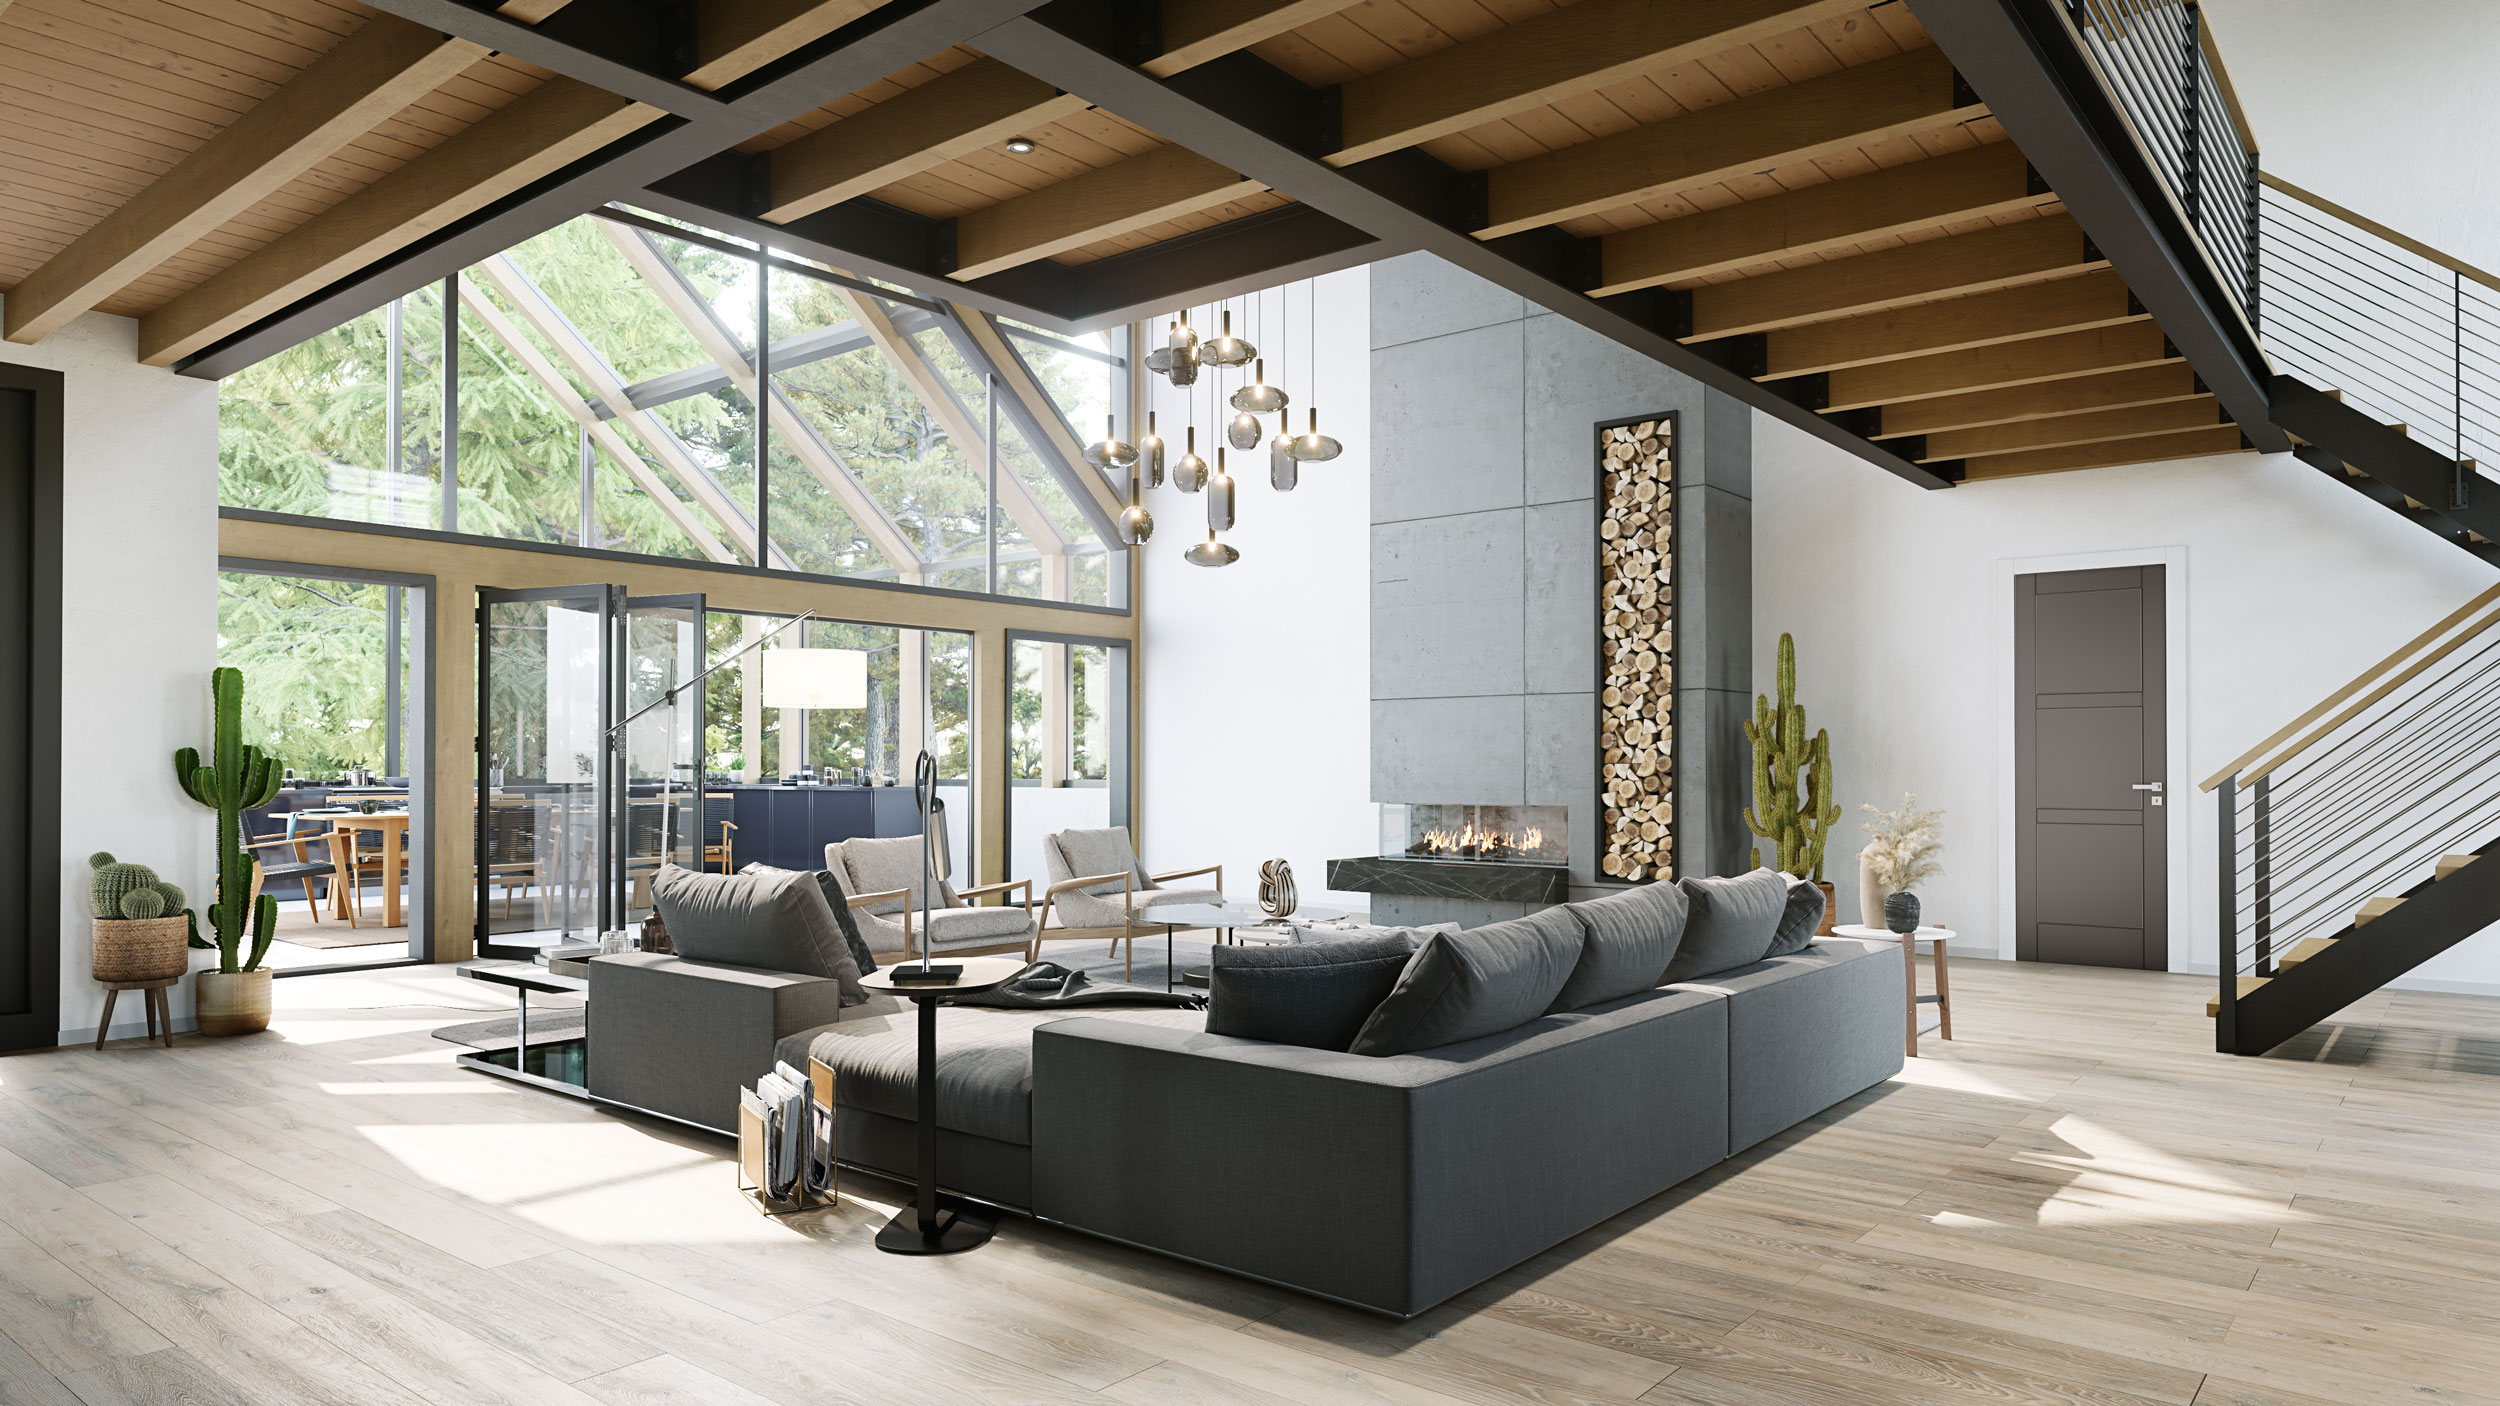 3D Corona Visualization of a House Interior